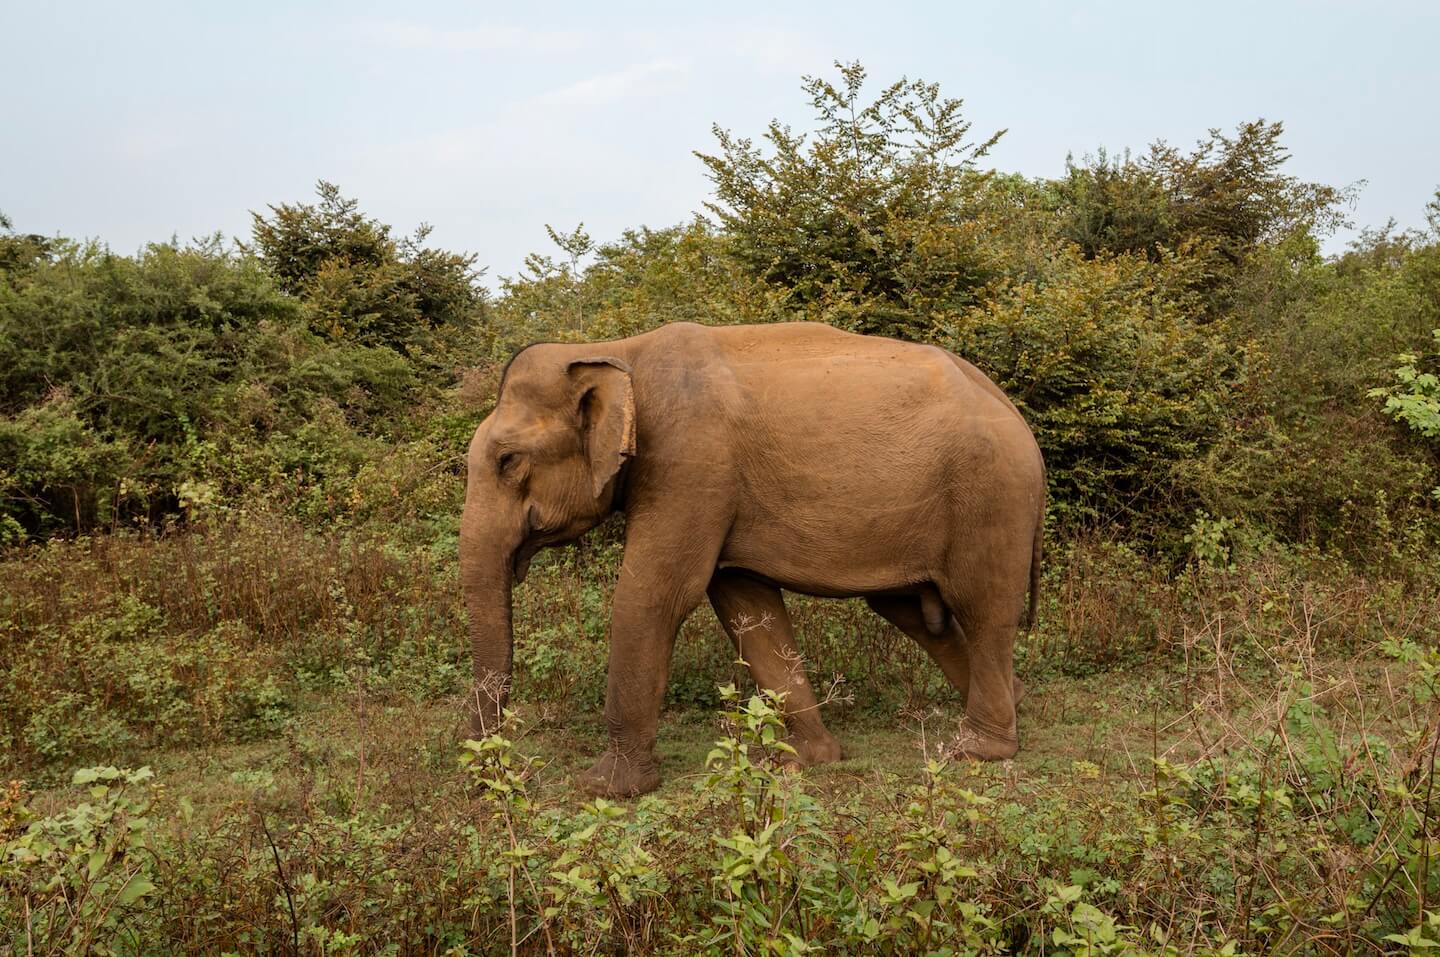 Elephant in Sri Lanka National Park.